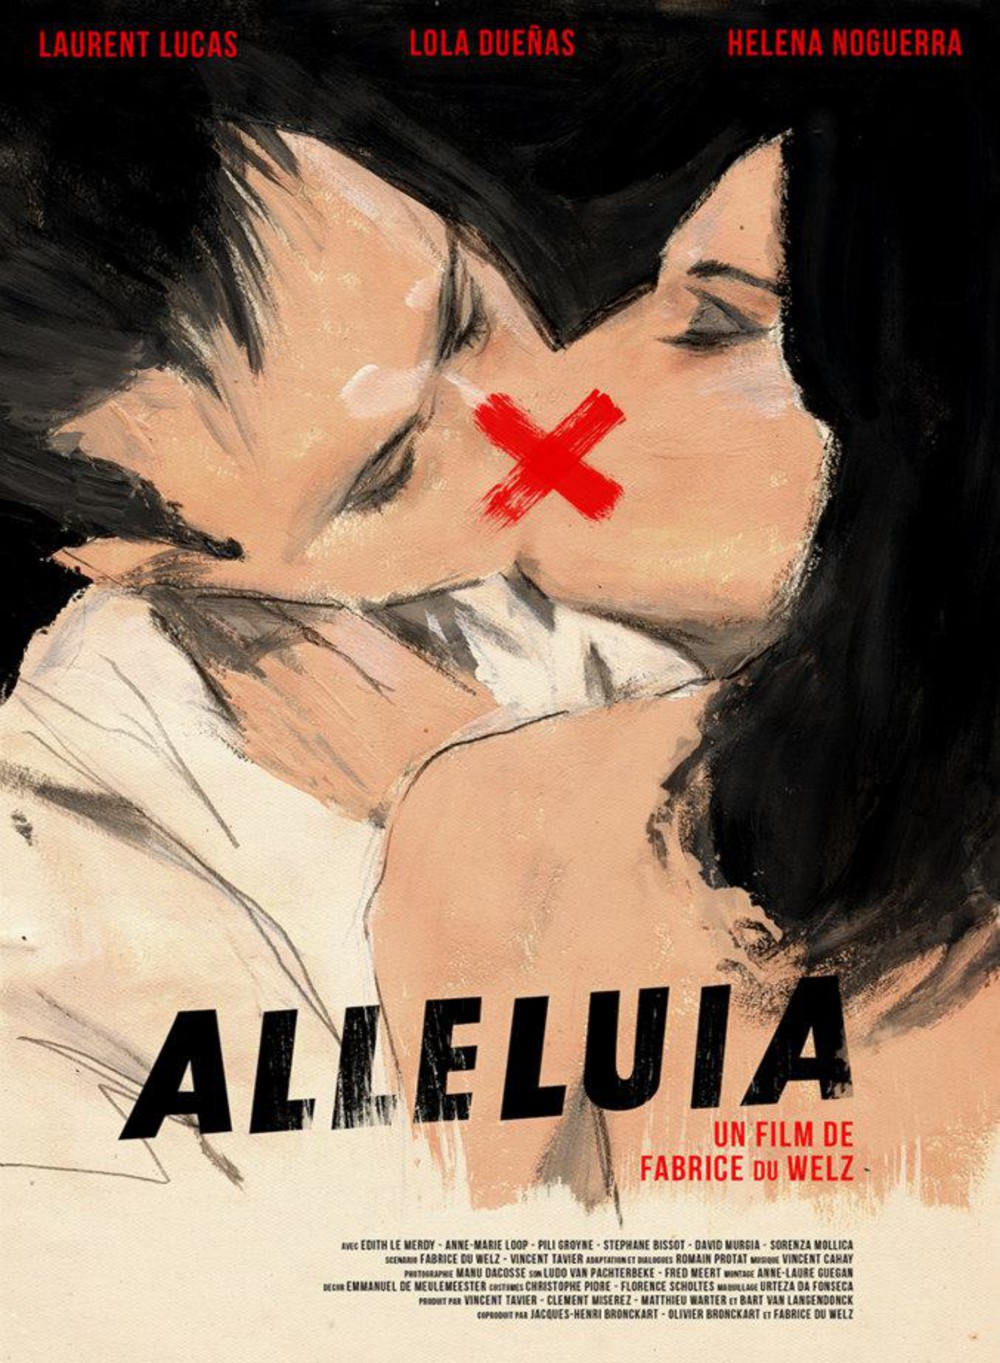 "Alleluia" (2014)